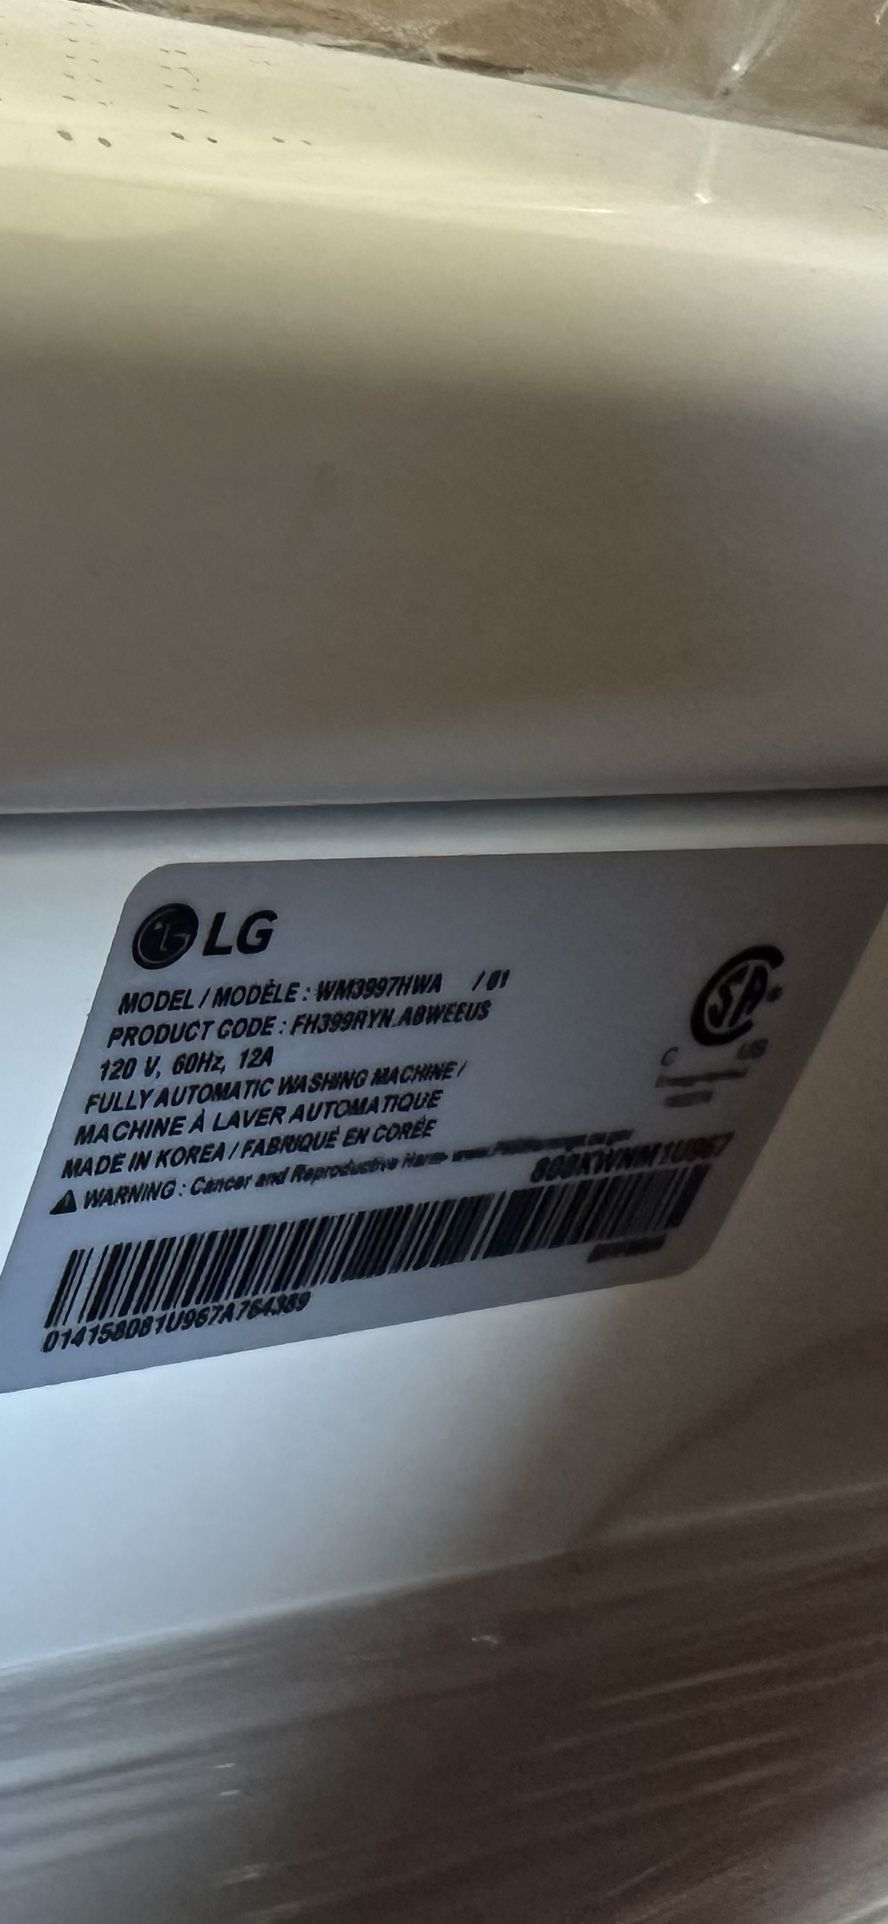 LG washer Dryer Combo 